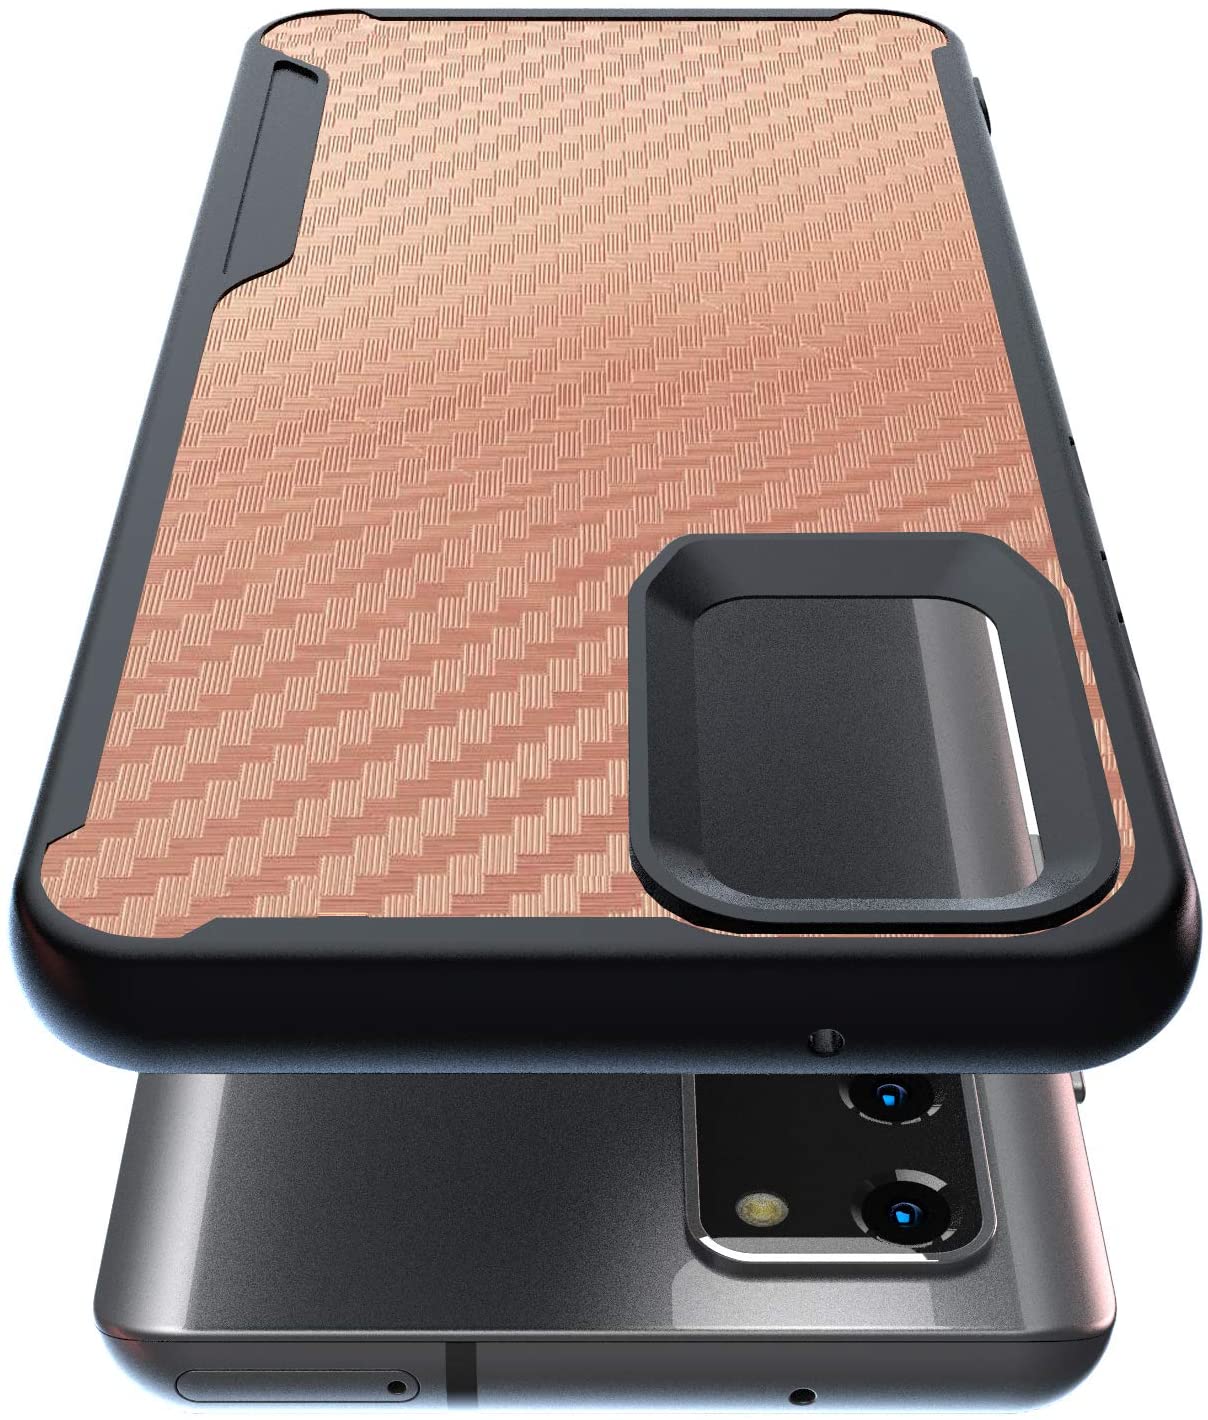 Samsung Galaxy Note 20 Kitoo Carbon Fiber Pattern Case Rose Gold